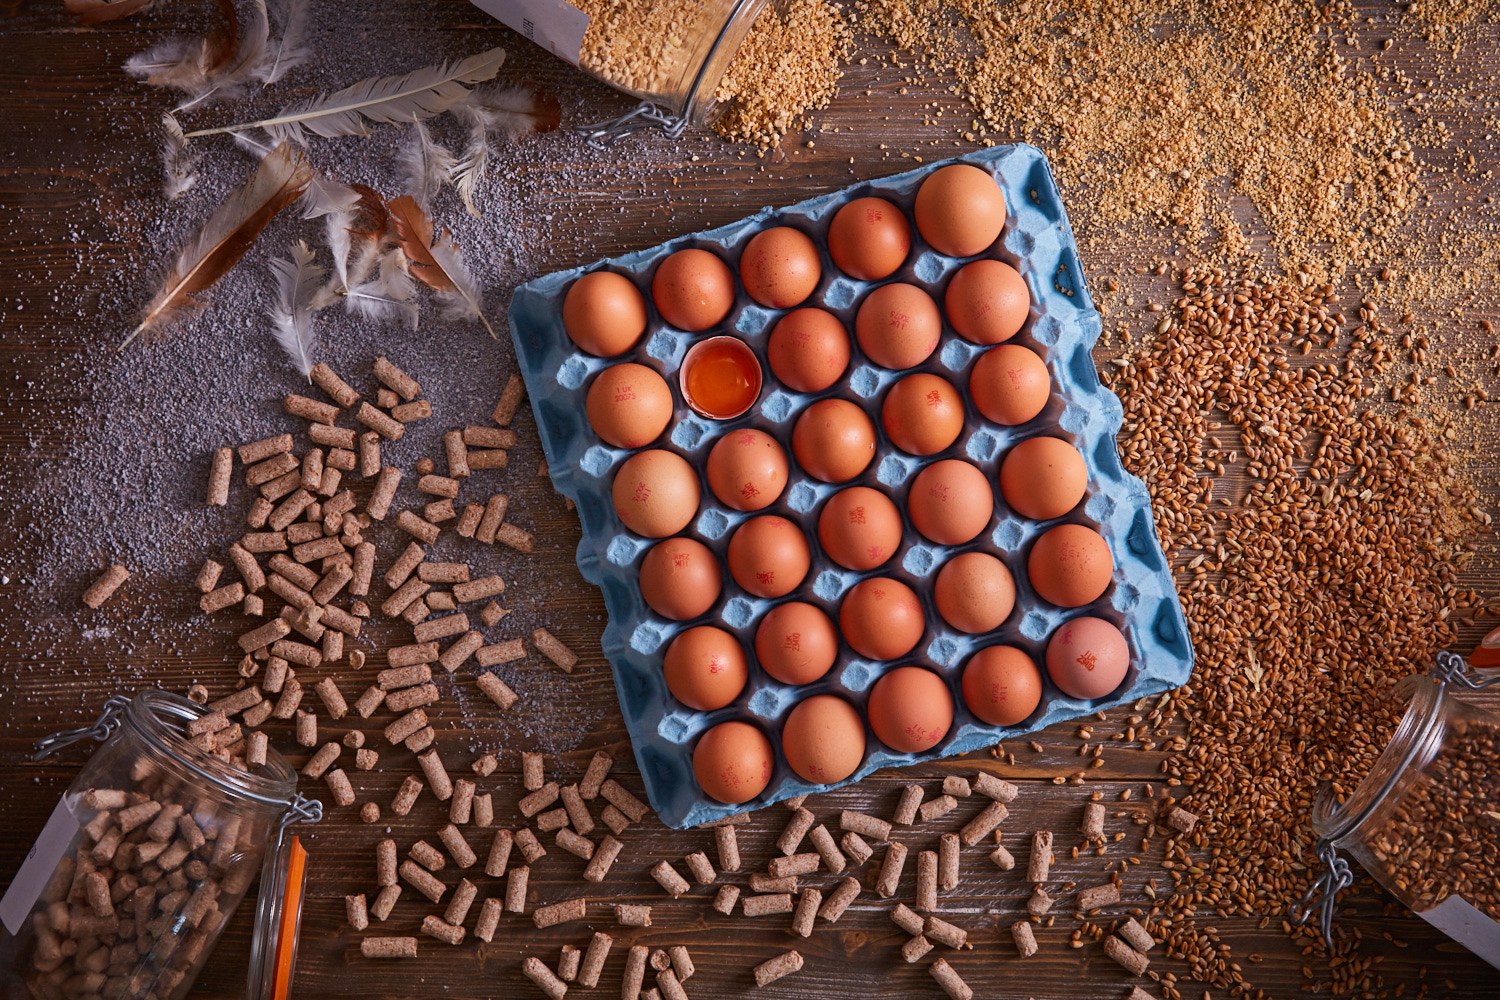 Cornish egg company donates thousands of eggs to food banks